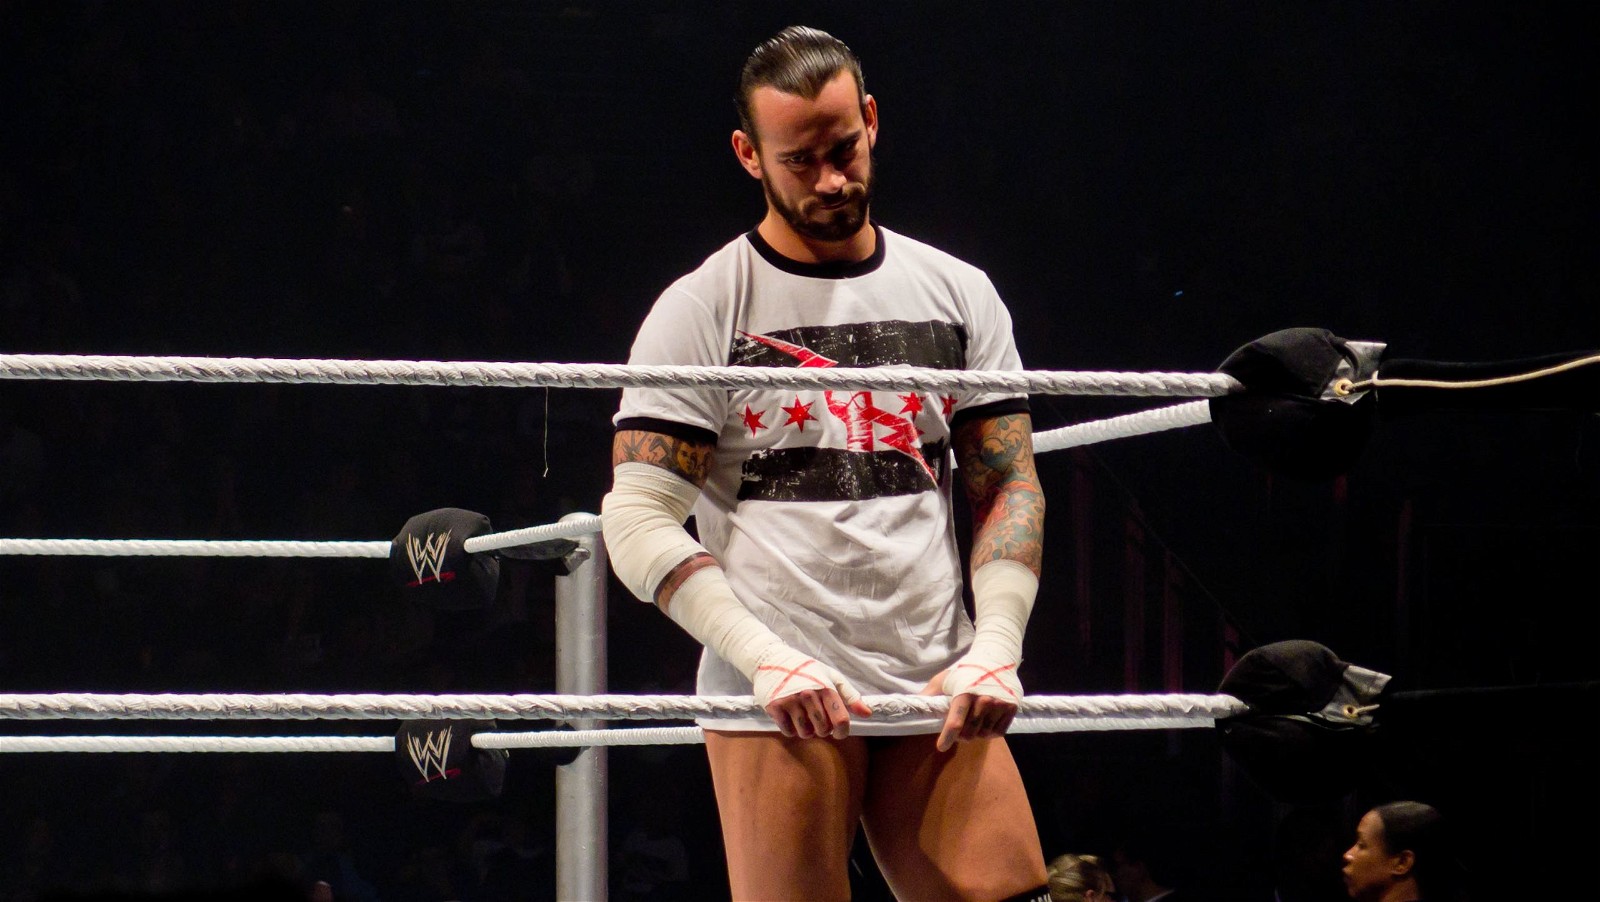 WWE superstar CM Punk